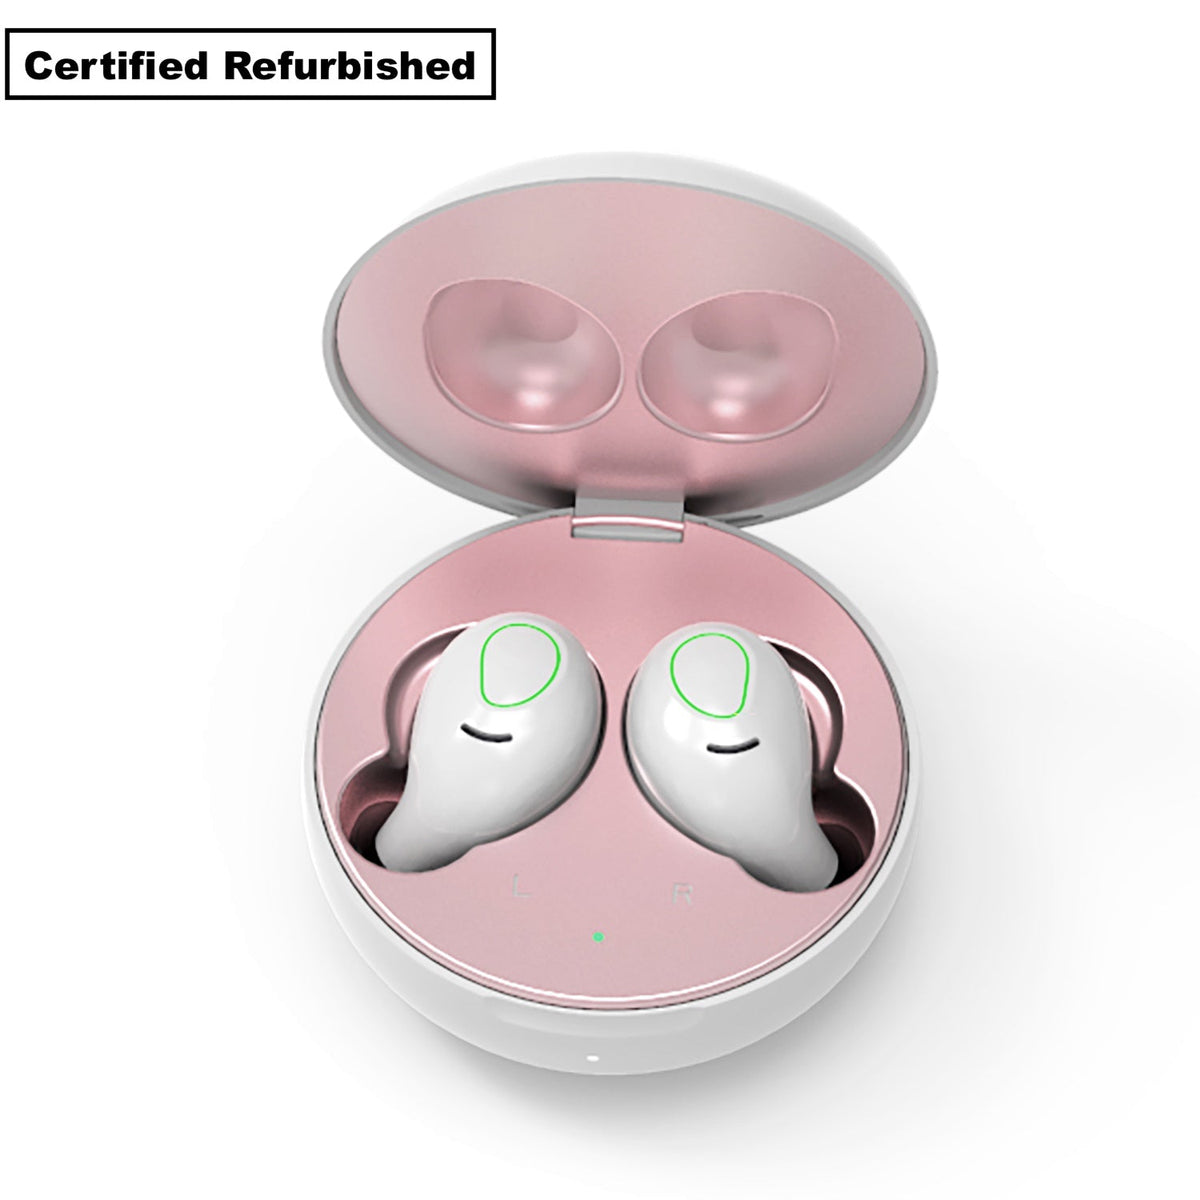 AIR ZEN 2.0 Pearl White and Rose Gold Earbuds (In Ear Wireless Headphones) - Grade B - Friendie Audio Pty Ltd